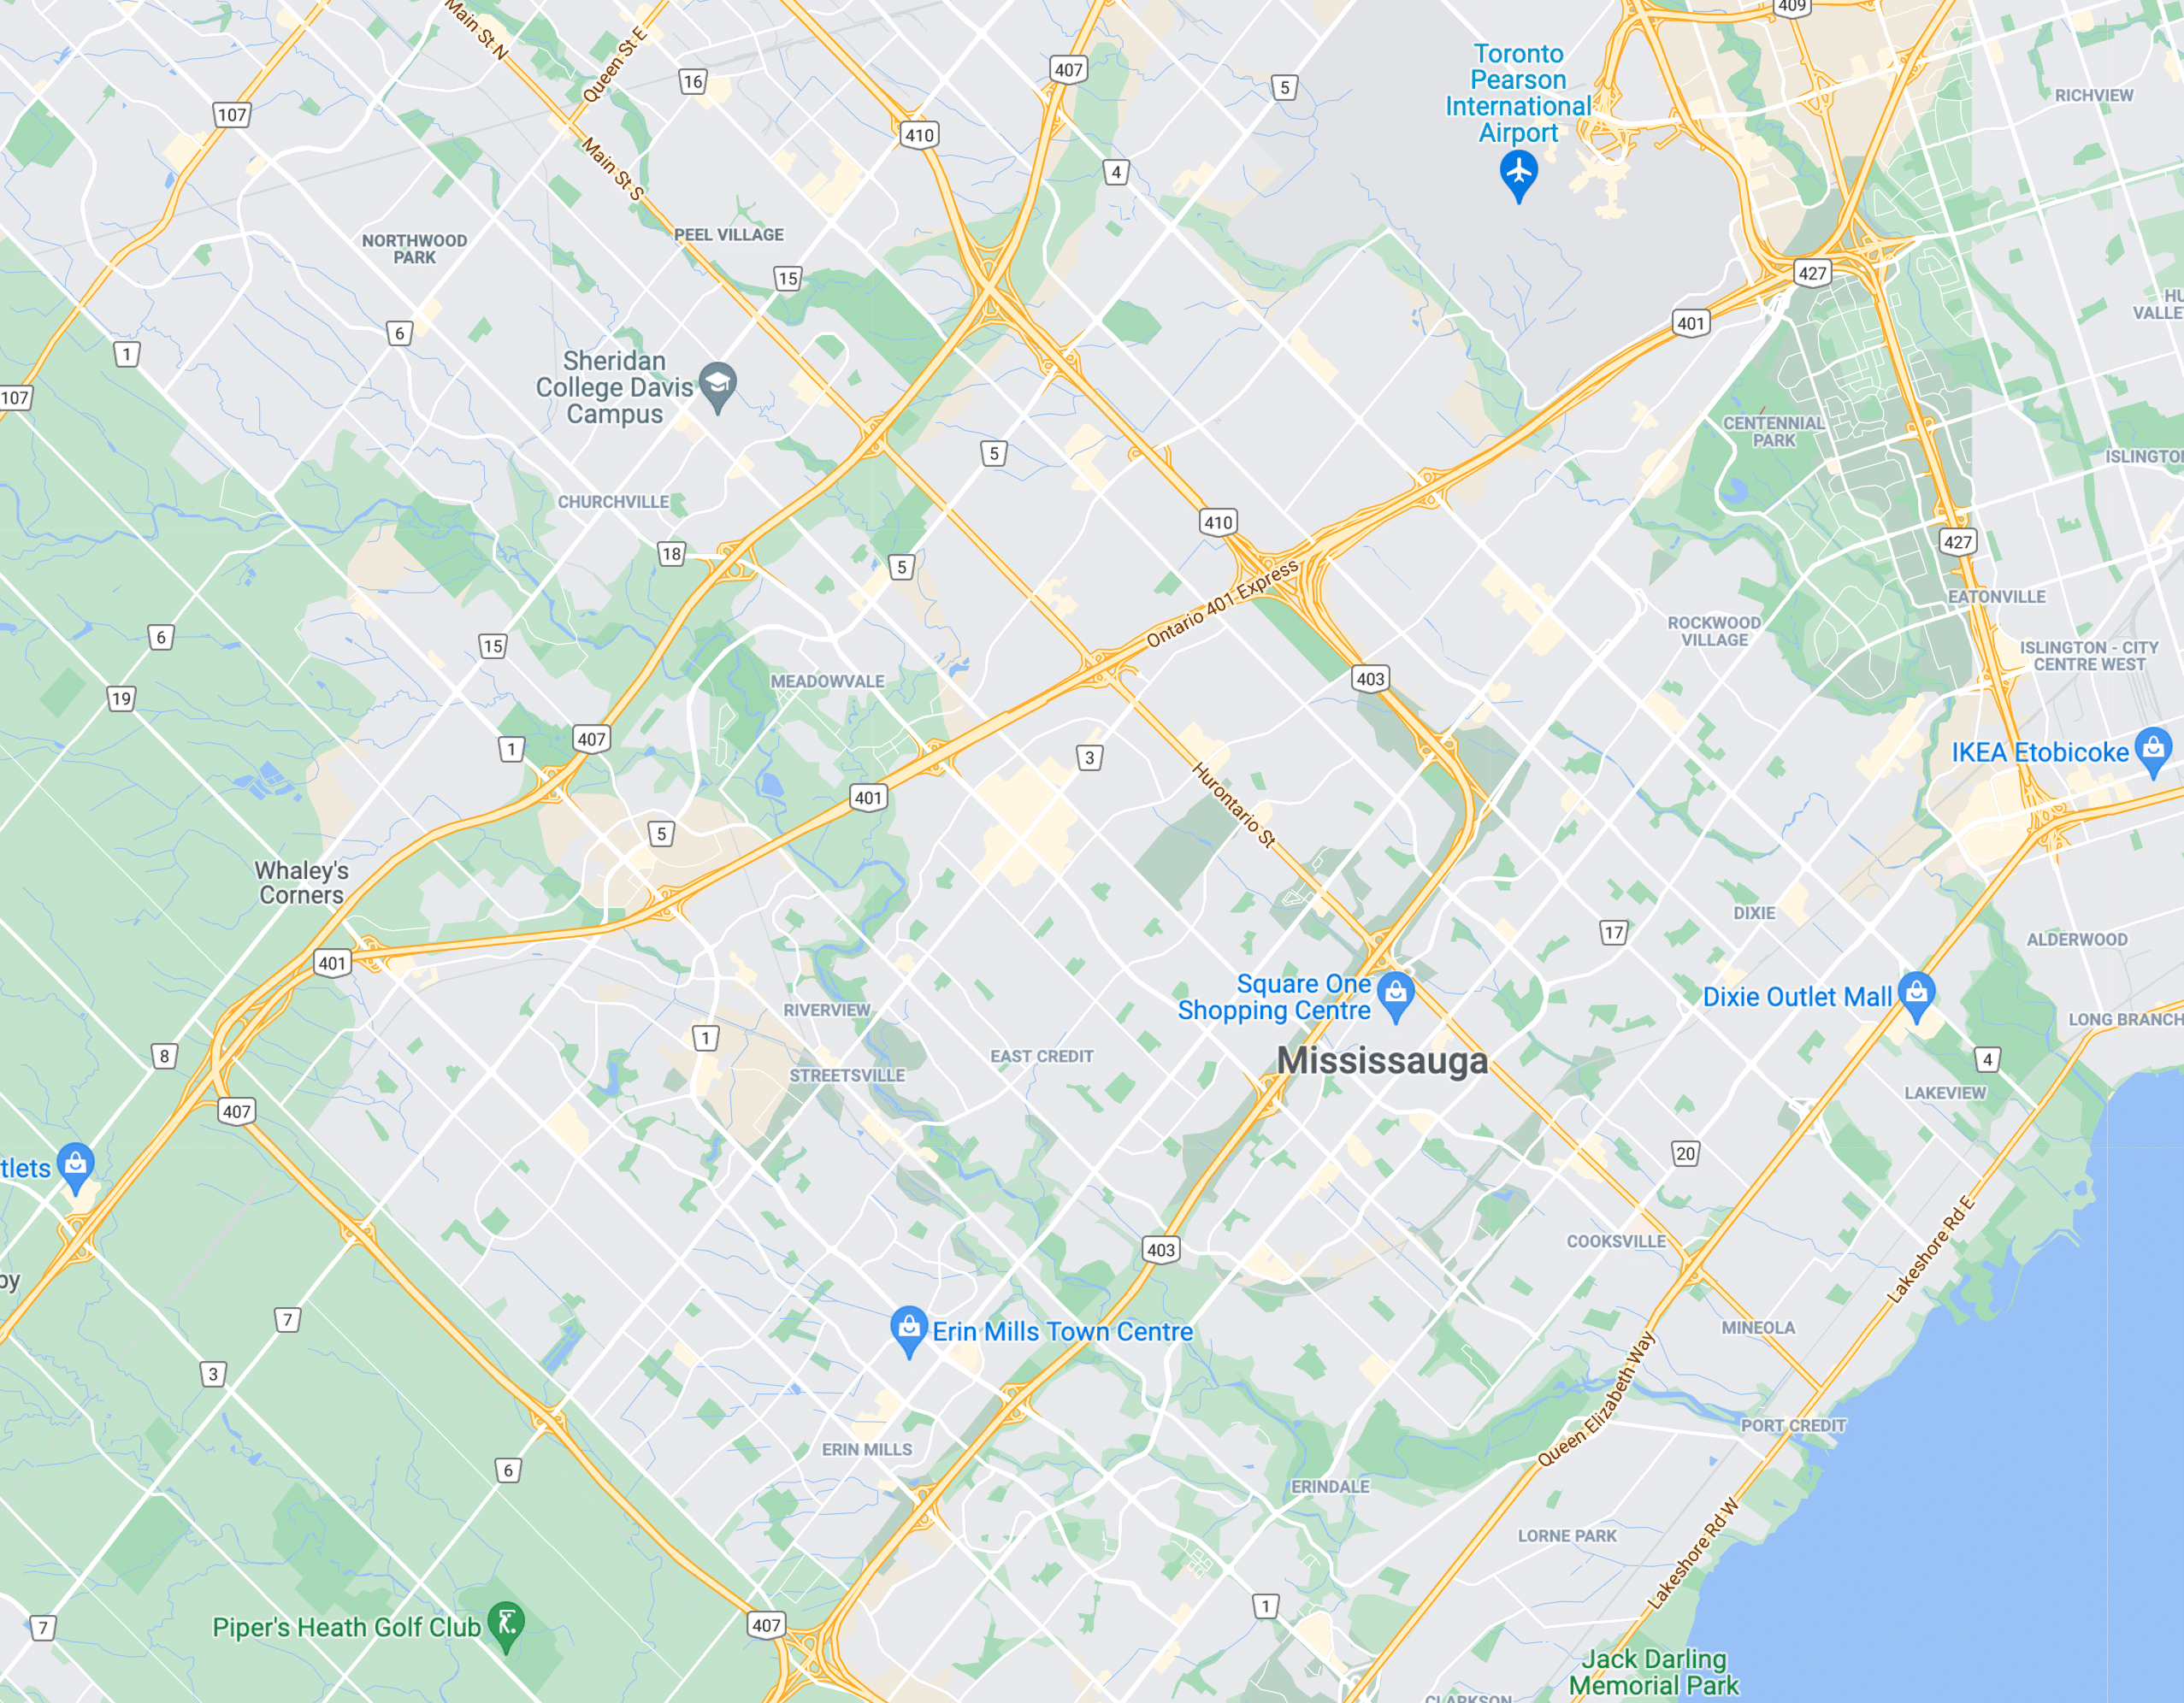 Location map of Mississauga, Ontario